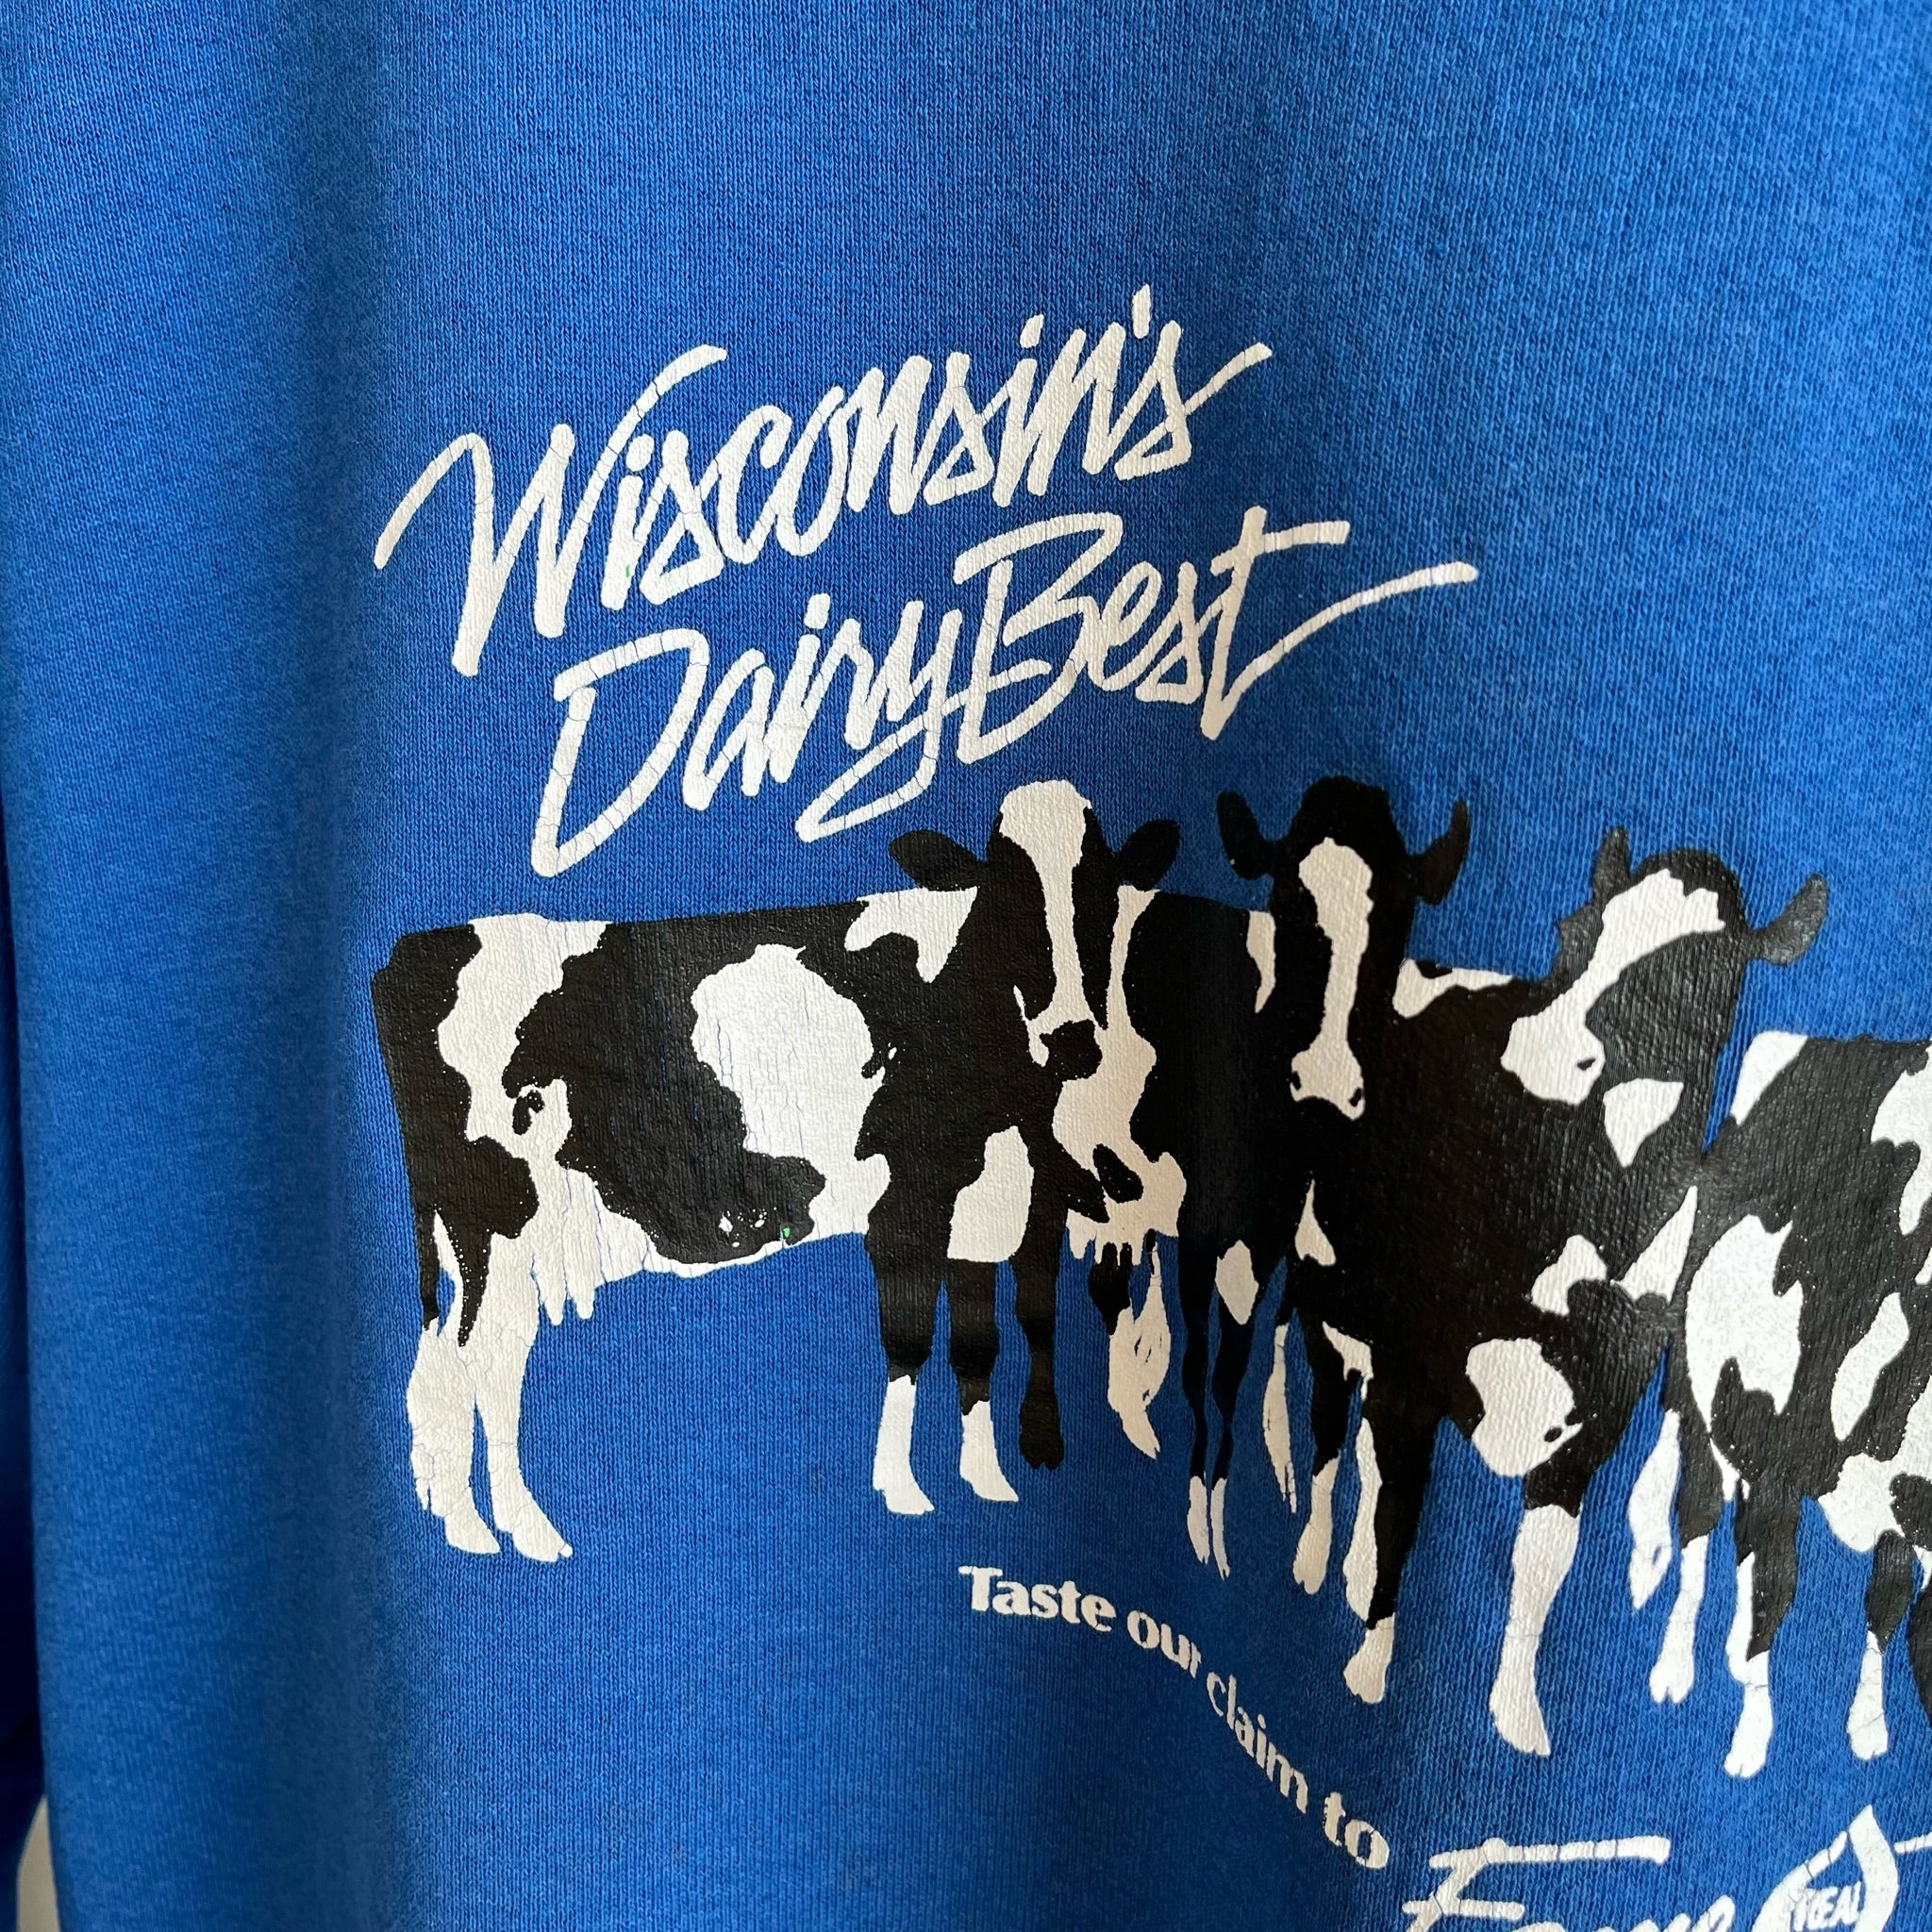 1980s Wisconsin's Dairy Best - Taste Our Claim To Fame - Vache Sweat par FOTL